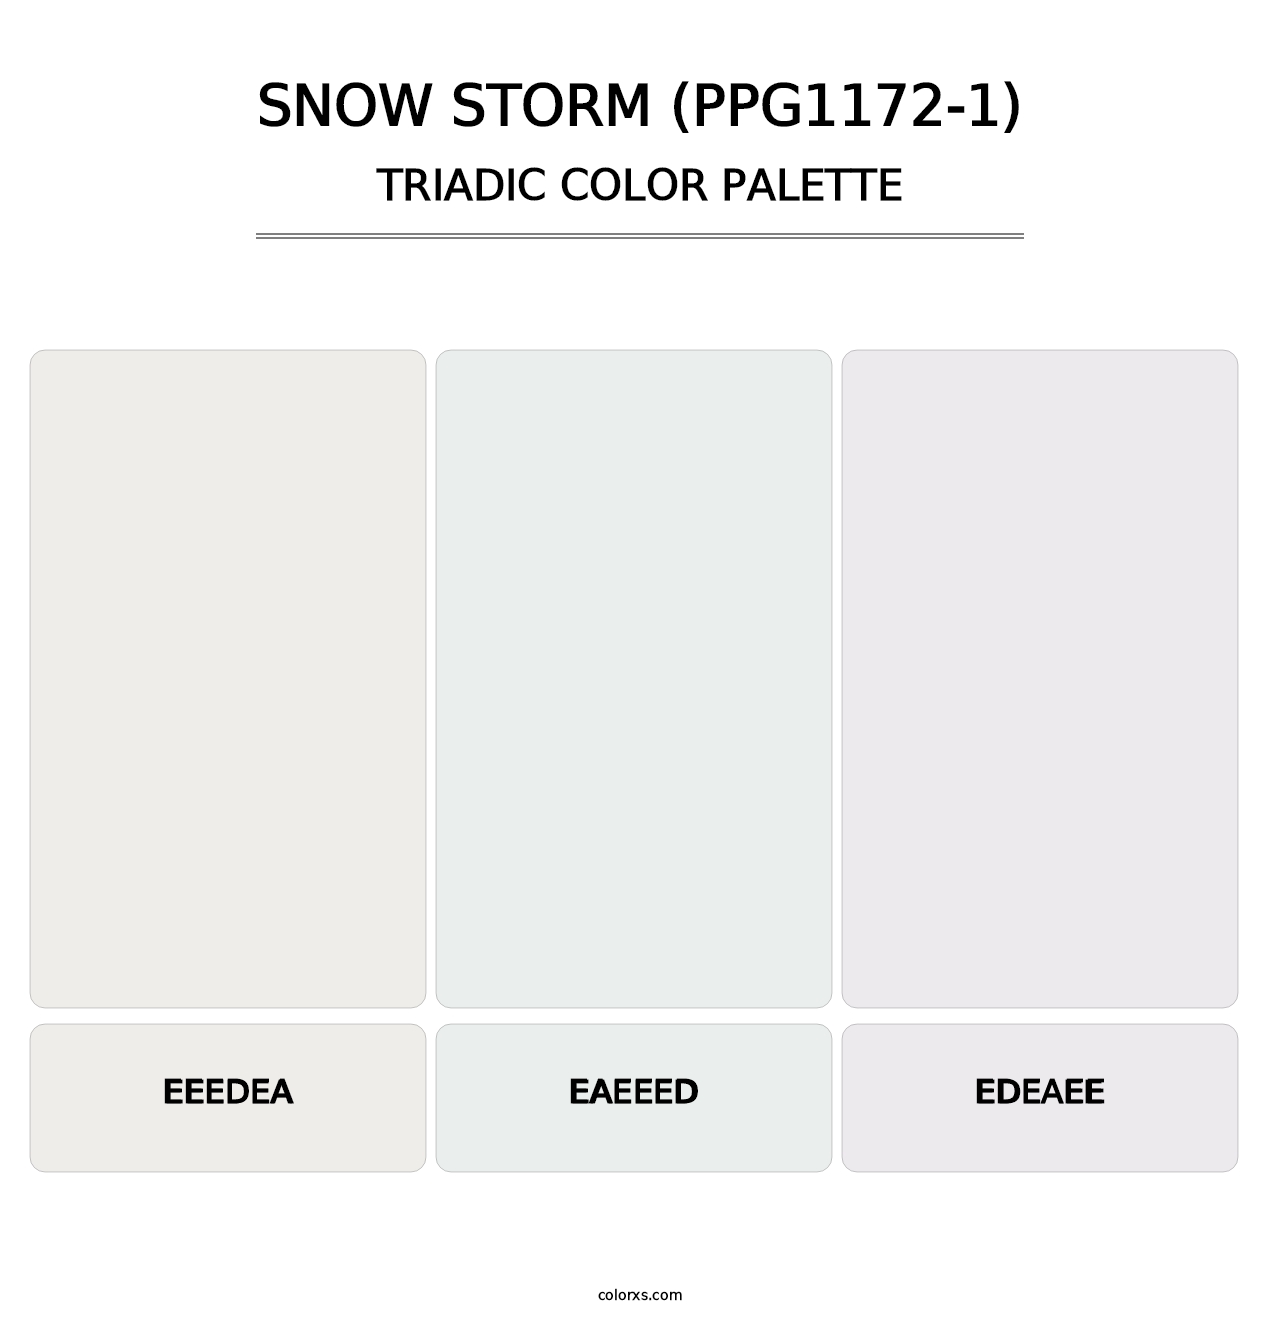 Snow Storm (PPG1172-1) - Triadic Color Palette